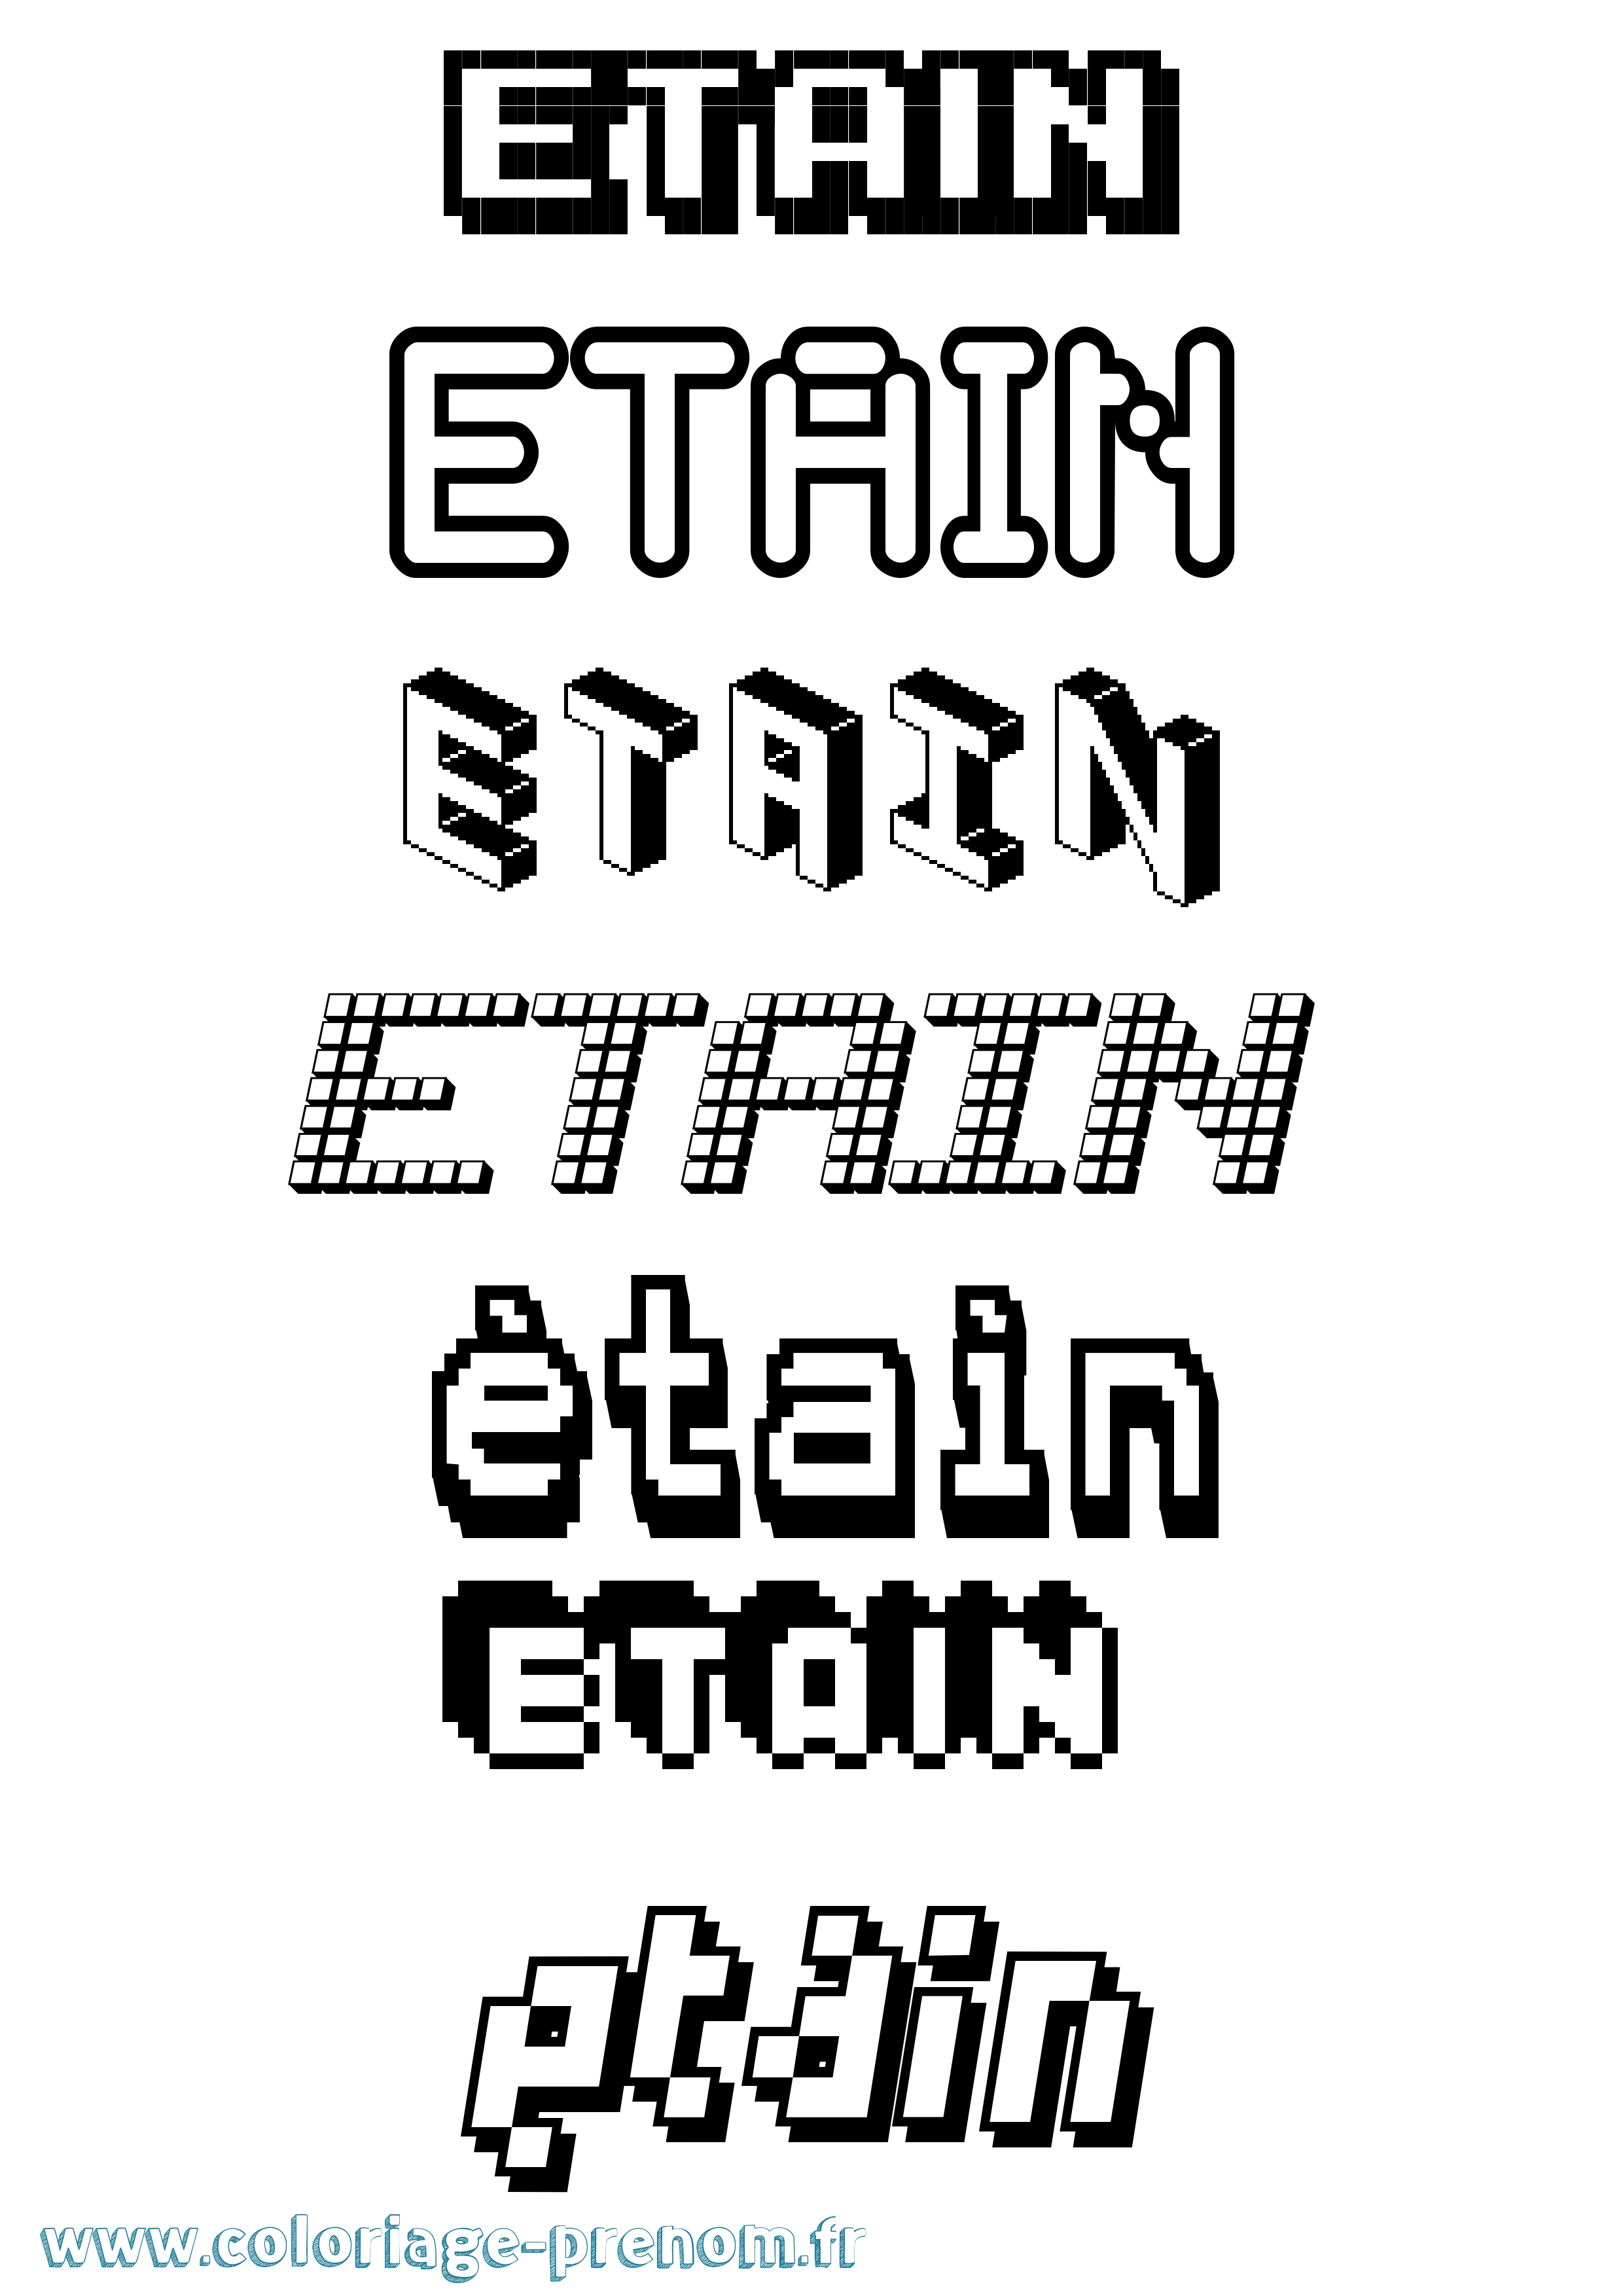 Coloriage prénom Étaín Pixel